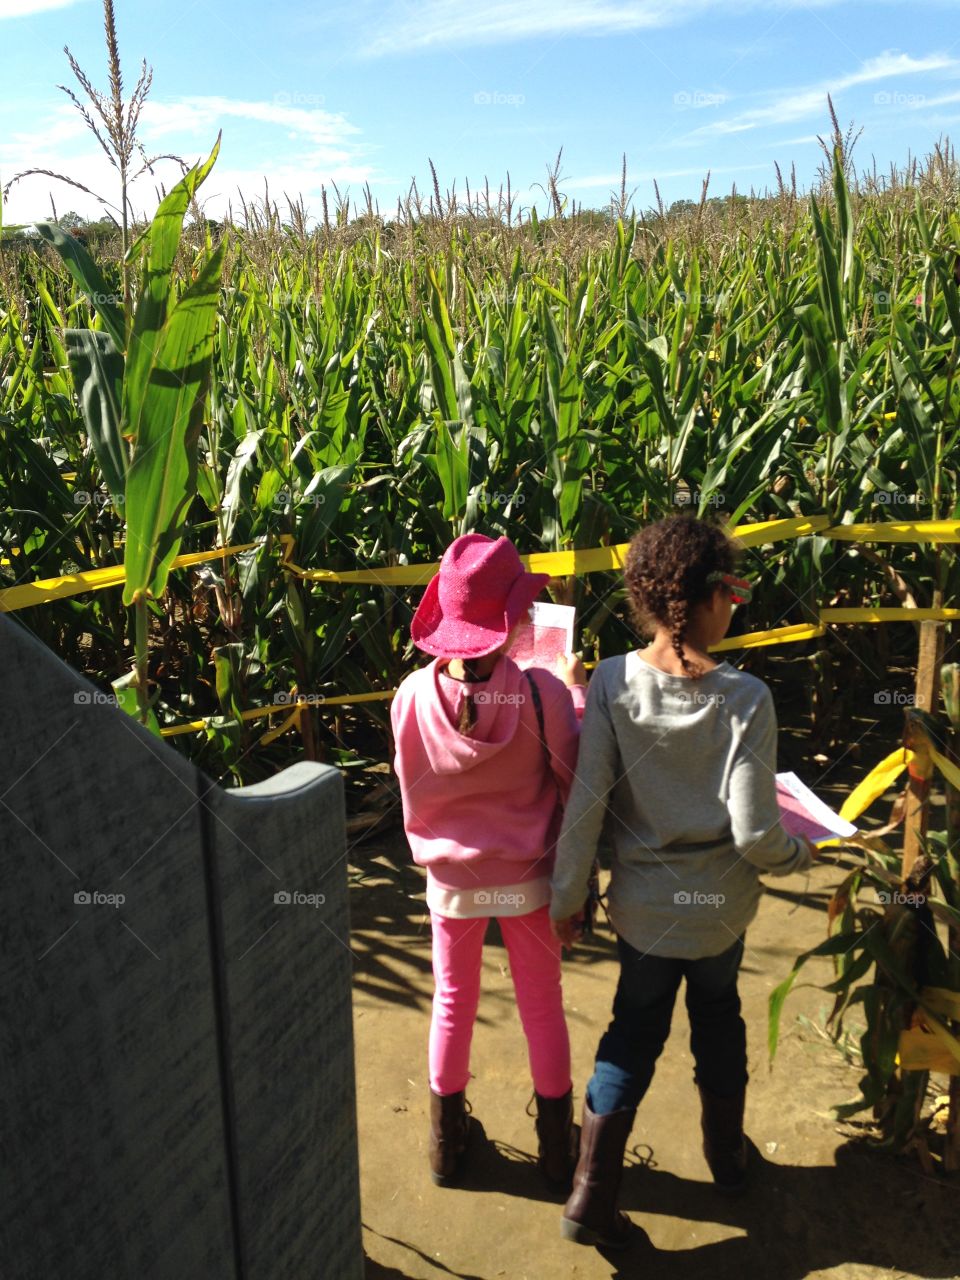 Following the Autumn corn maze